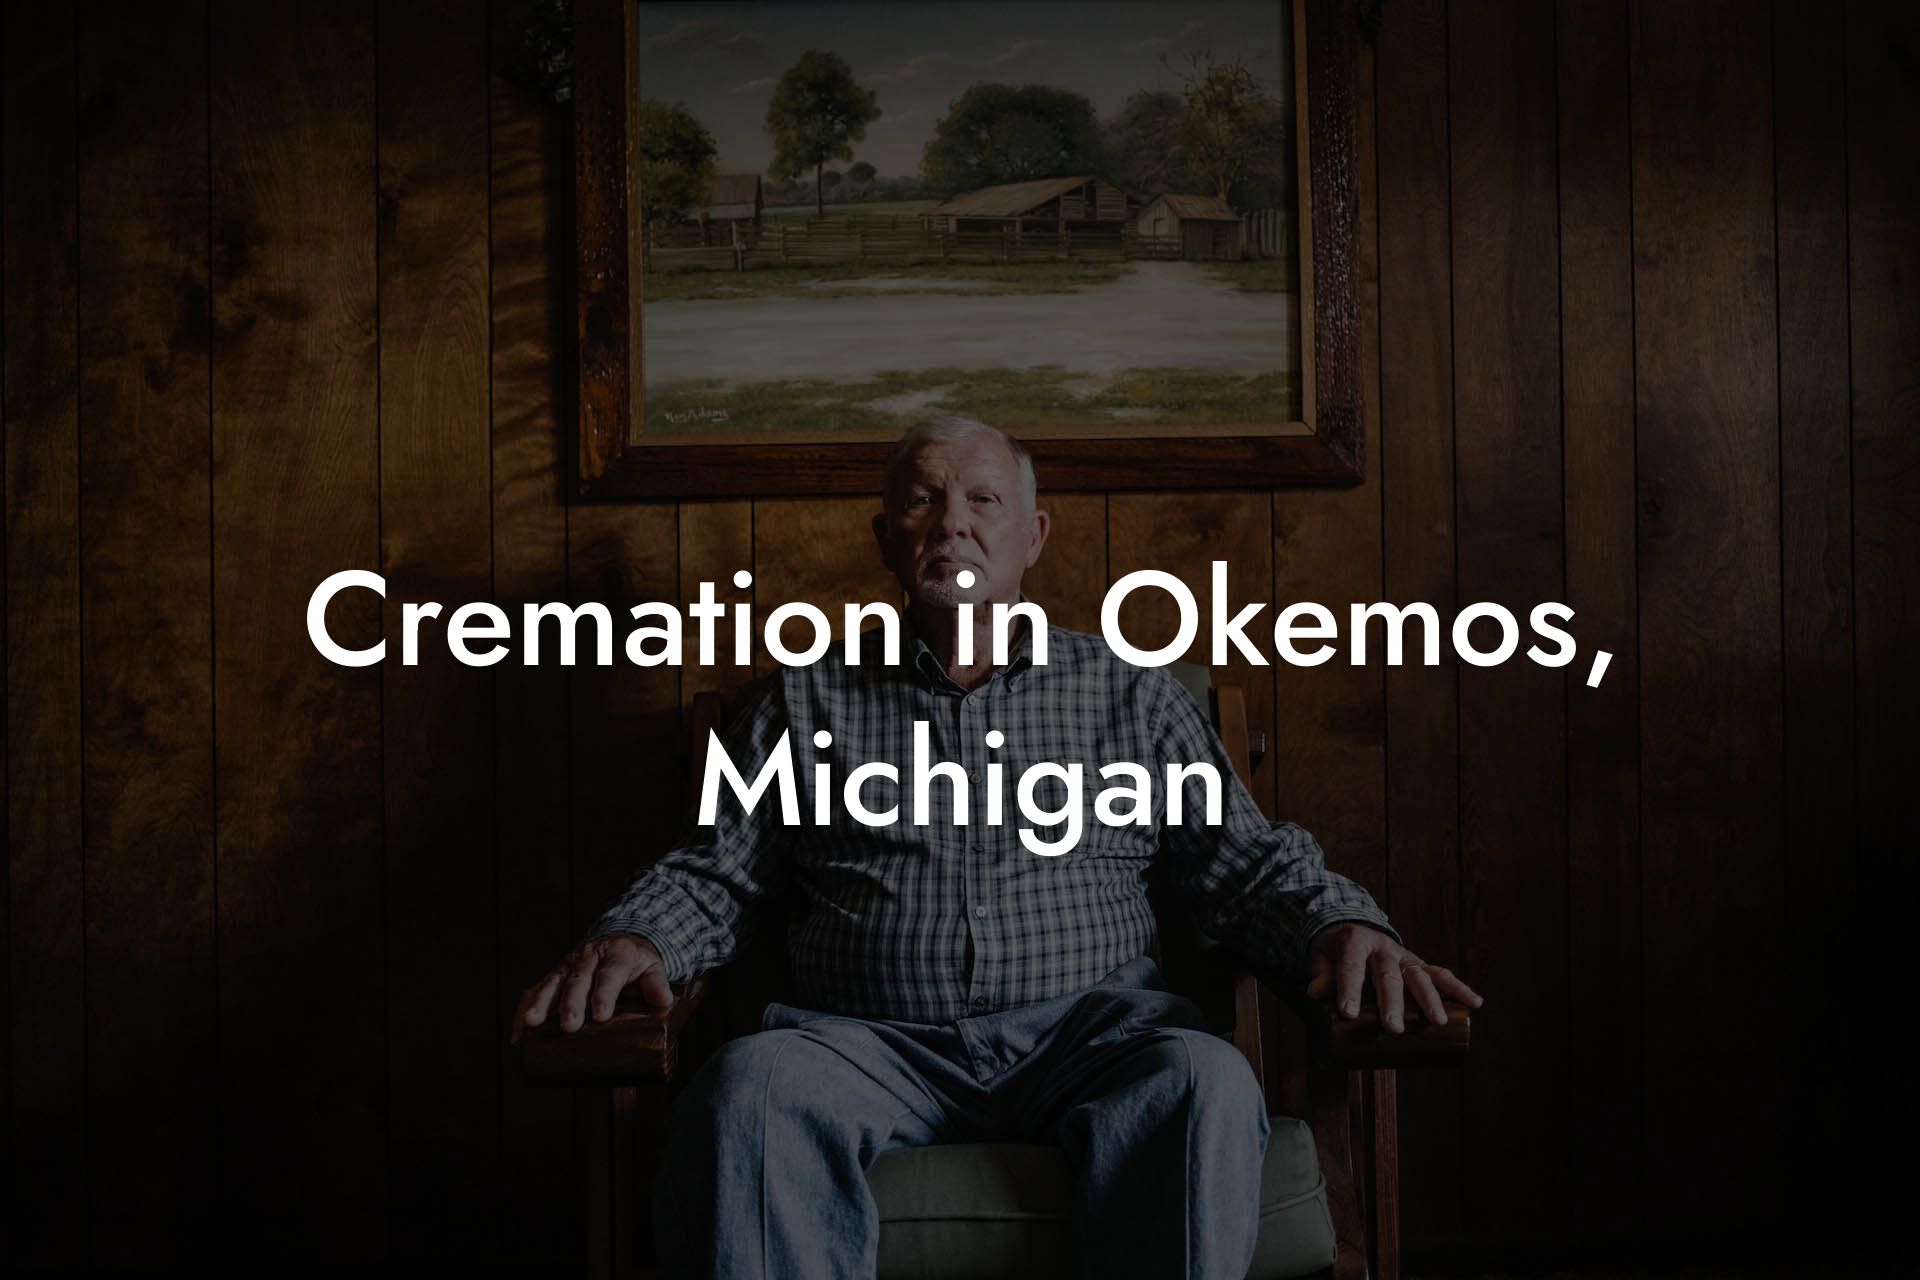 Cremation in Okemos, Michigan